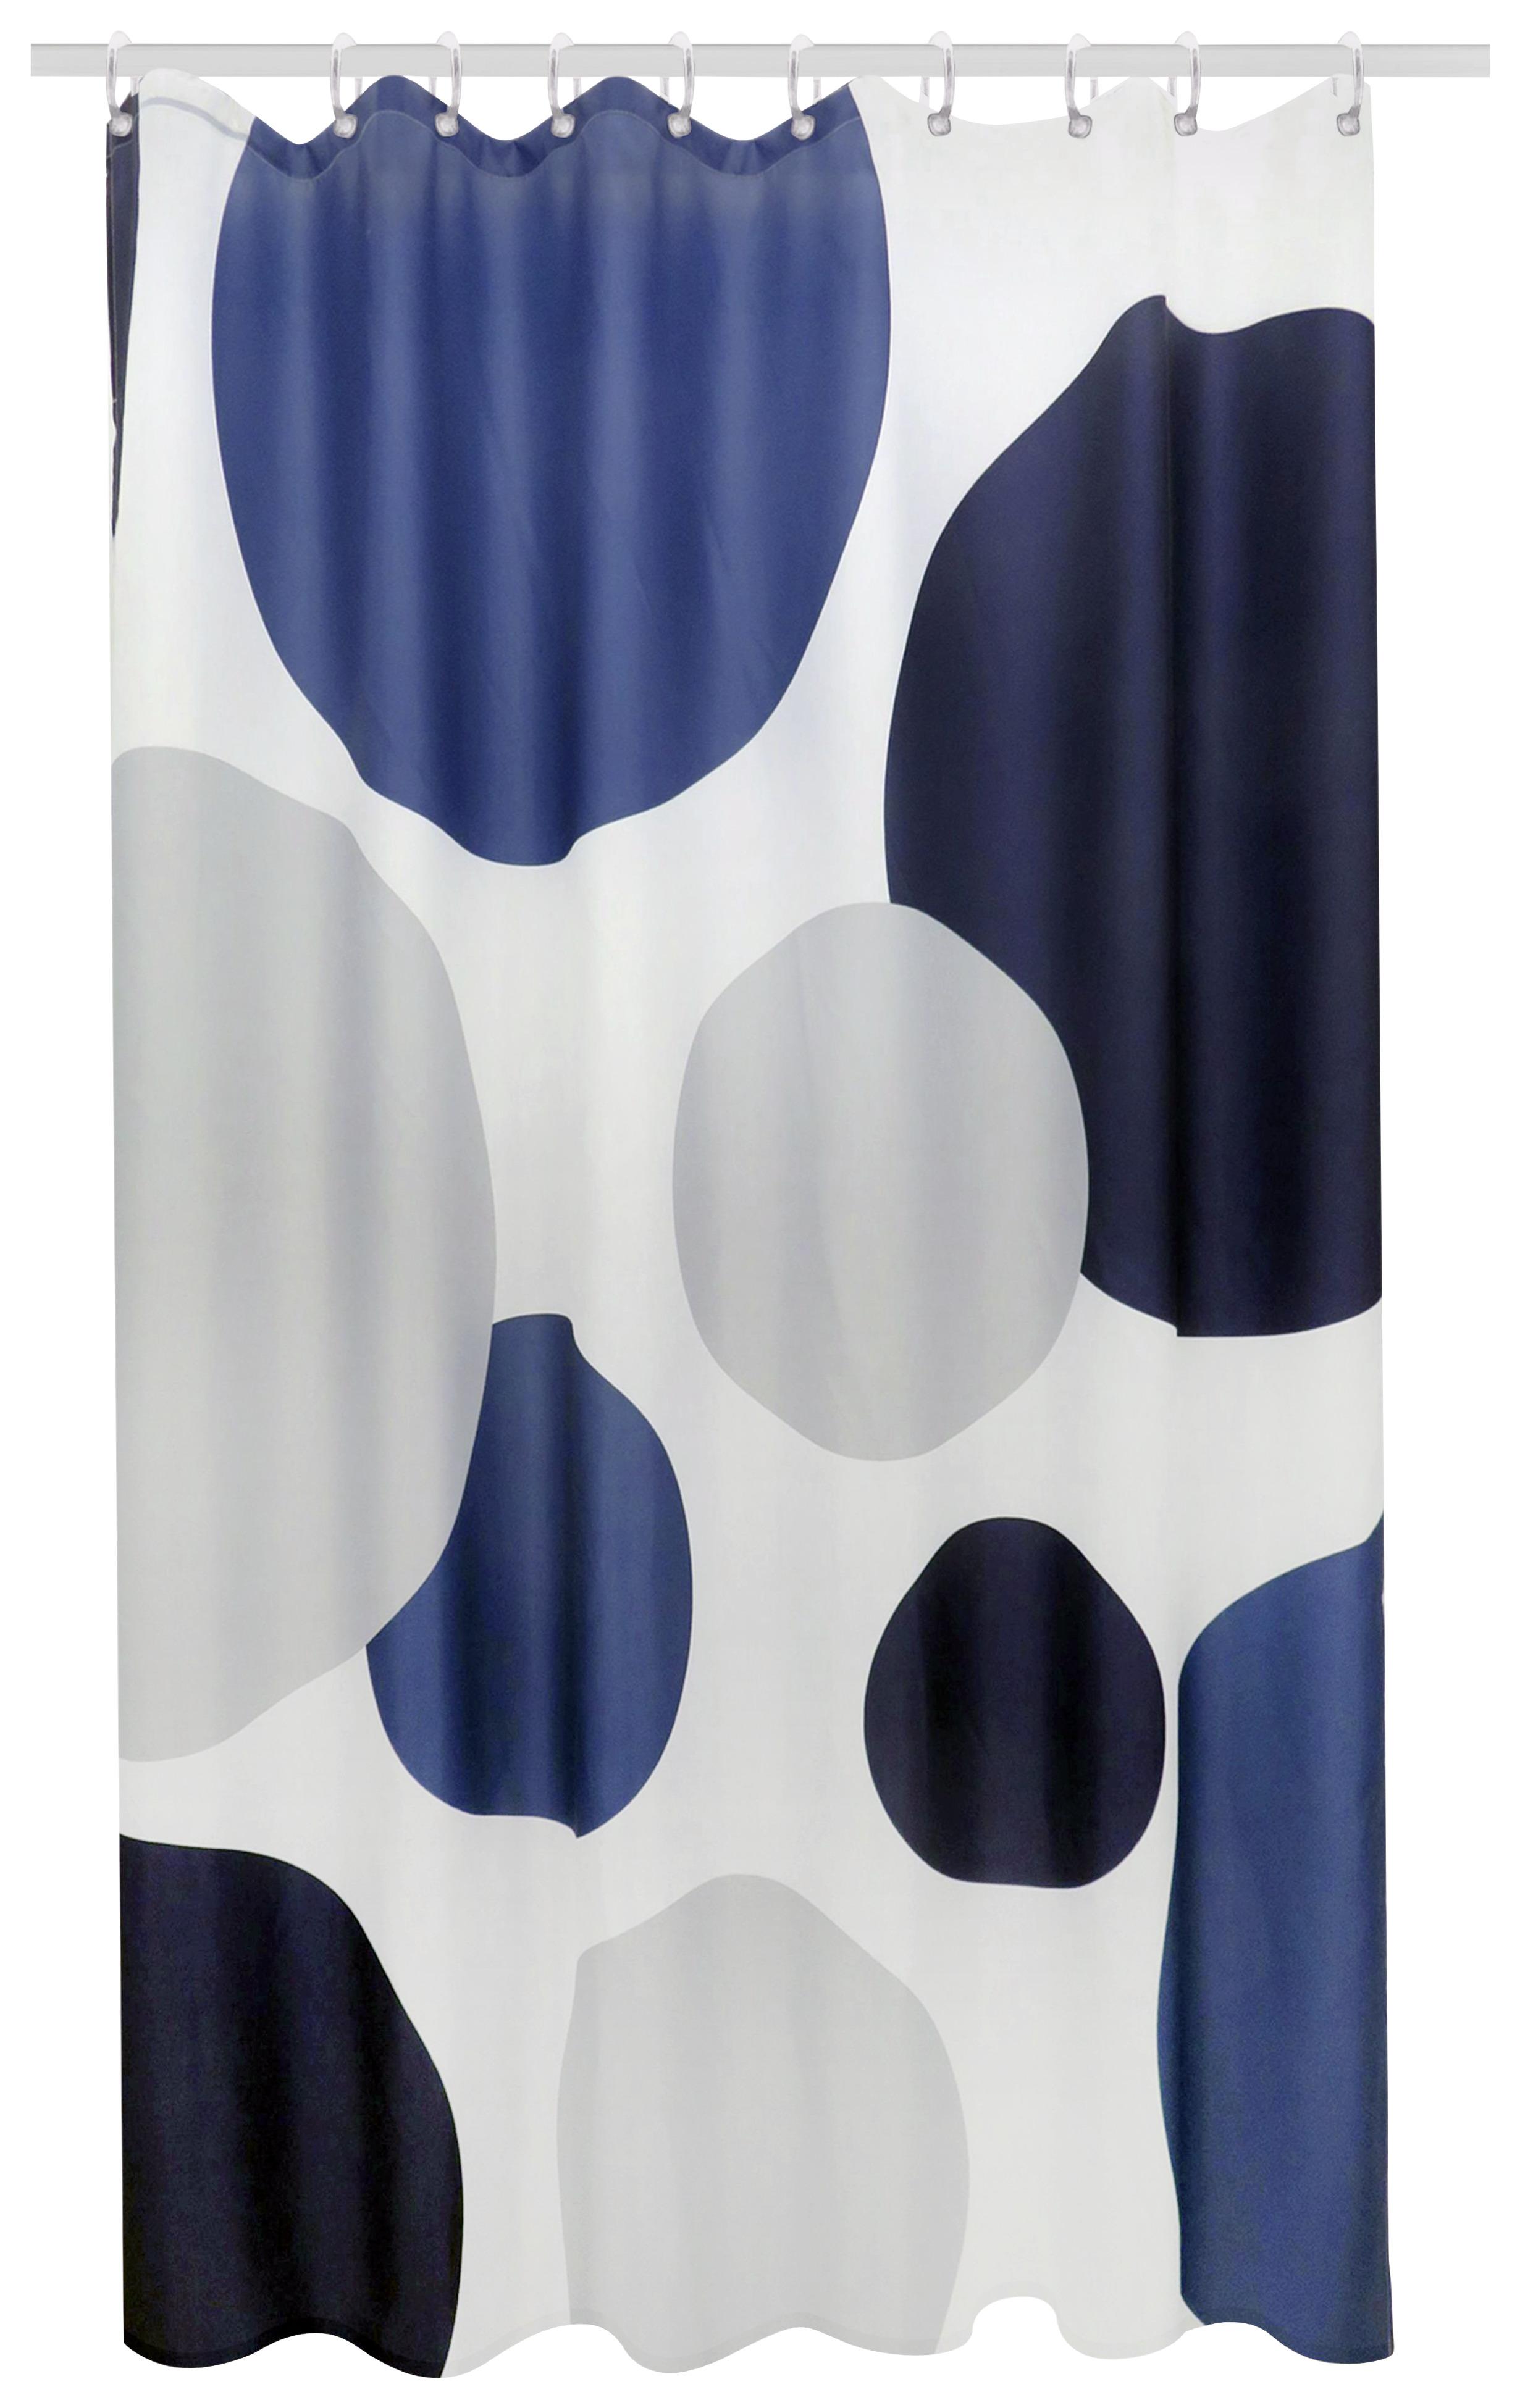 Duschvorhang Svenja 180x200 cm Weiß/Blau Halbtransparent - Blau/Weiß, MODERN, Textil (180/200cm) - Luca Bessoni